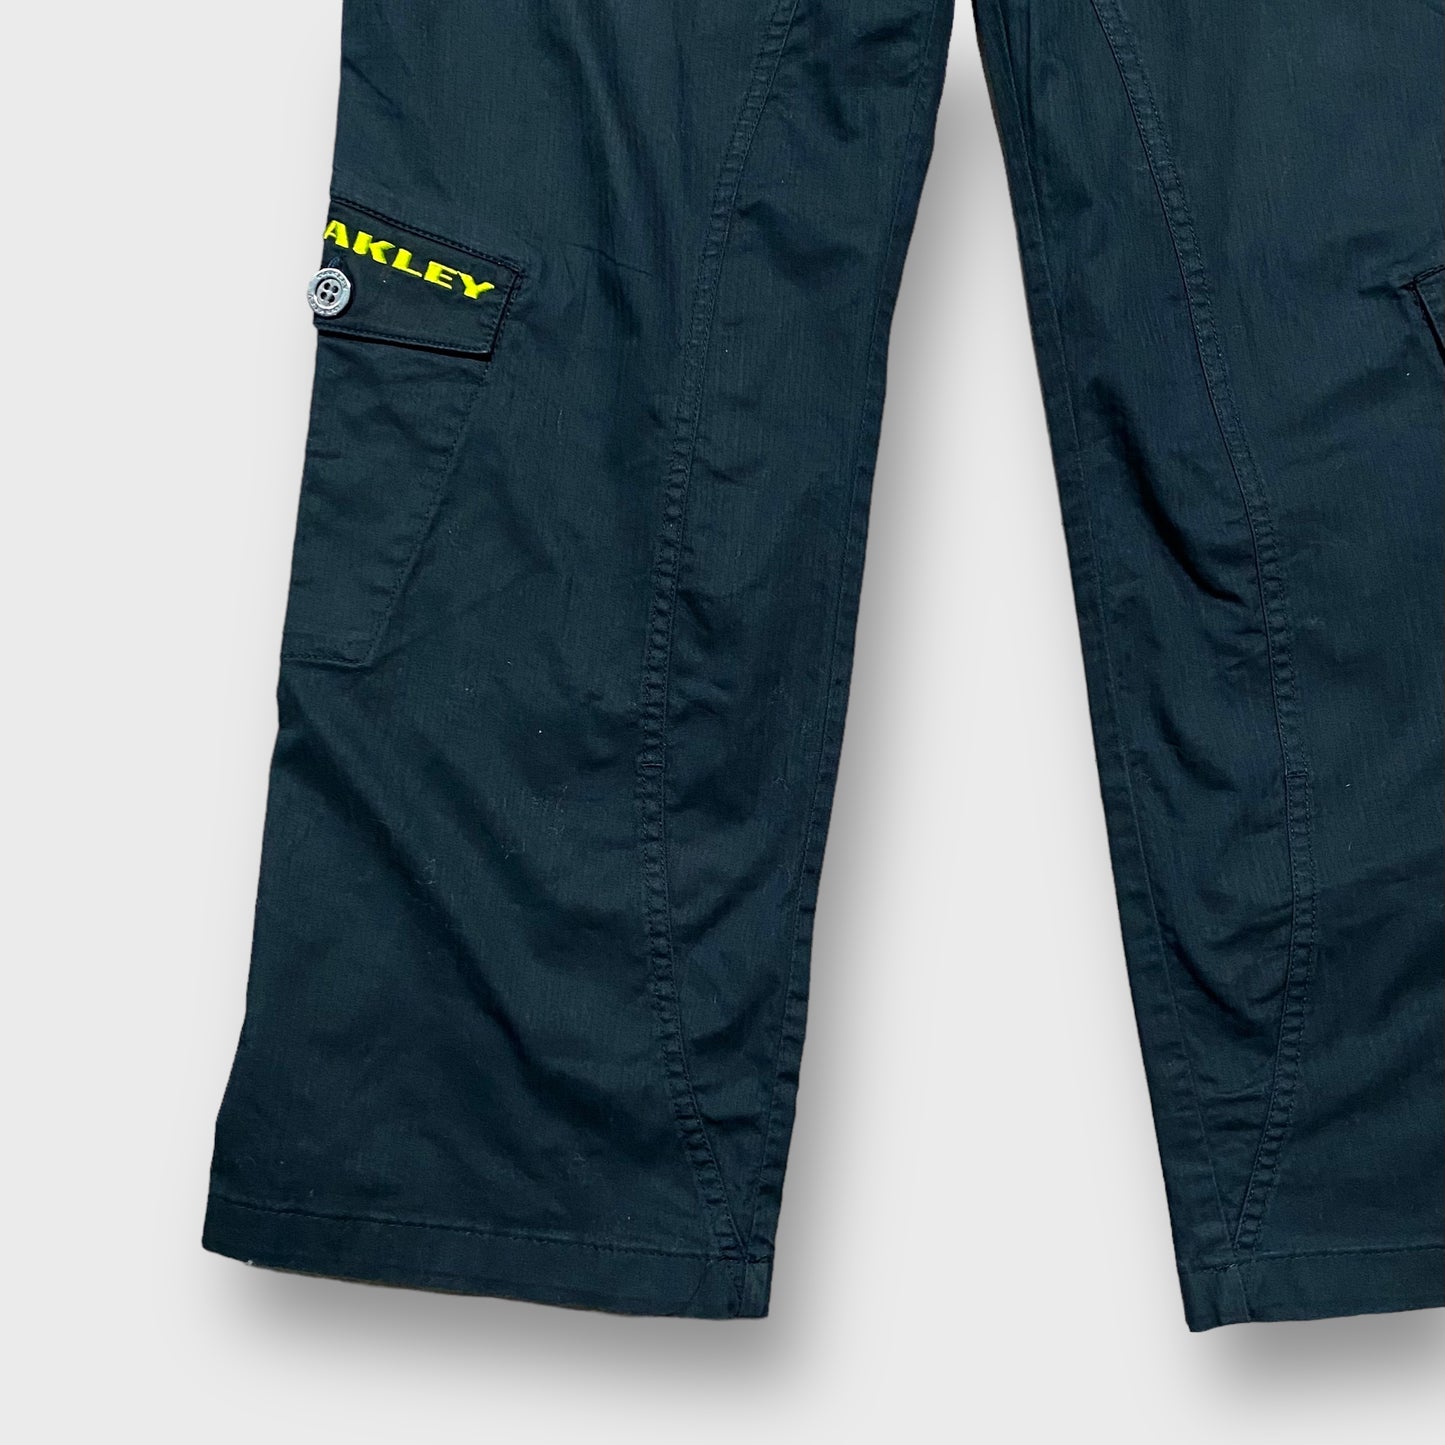 00's "OAKLEY" Nylon cargo pants